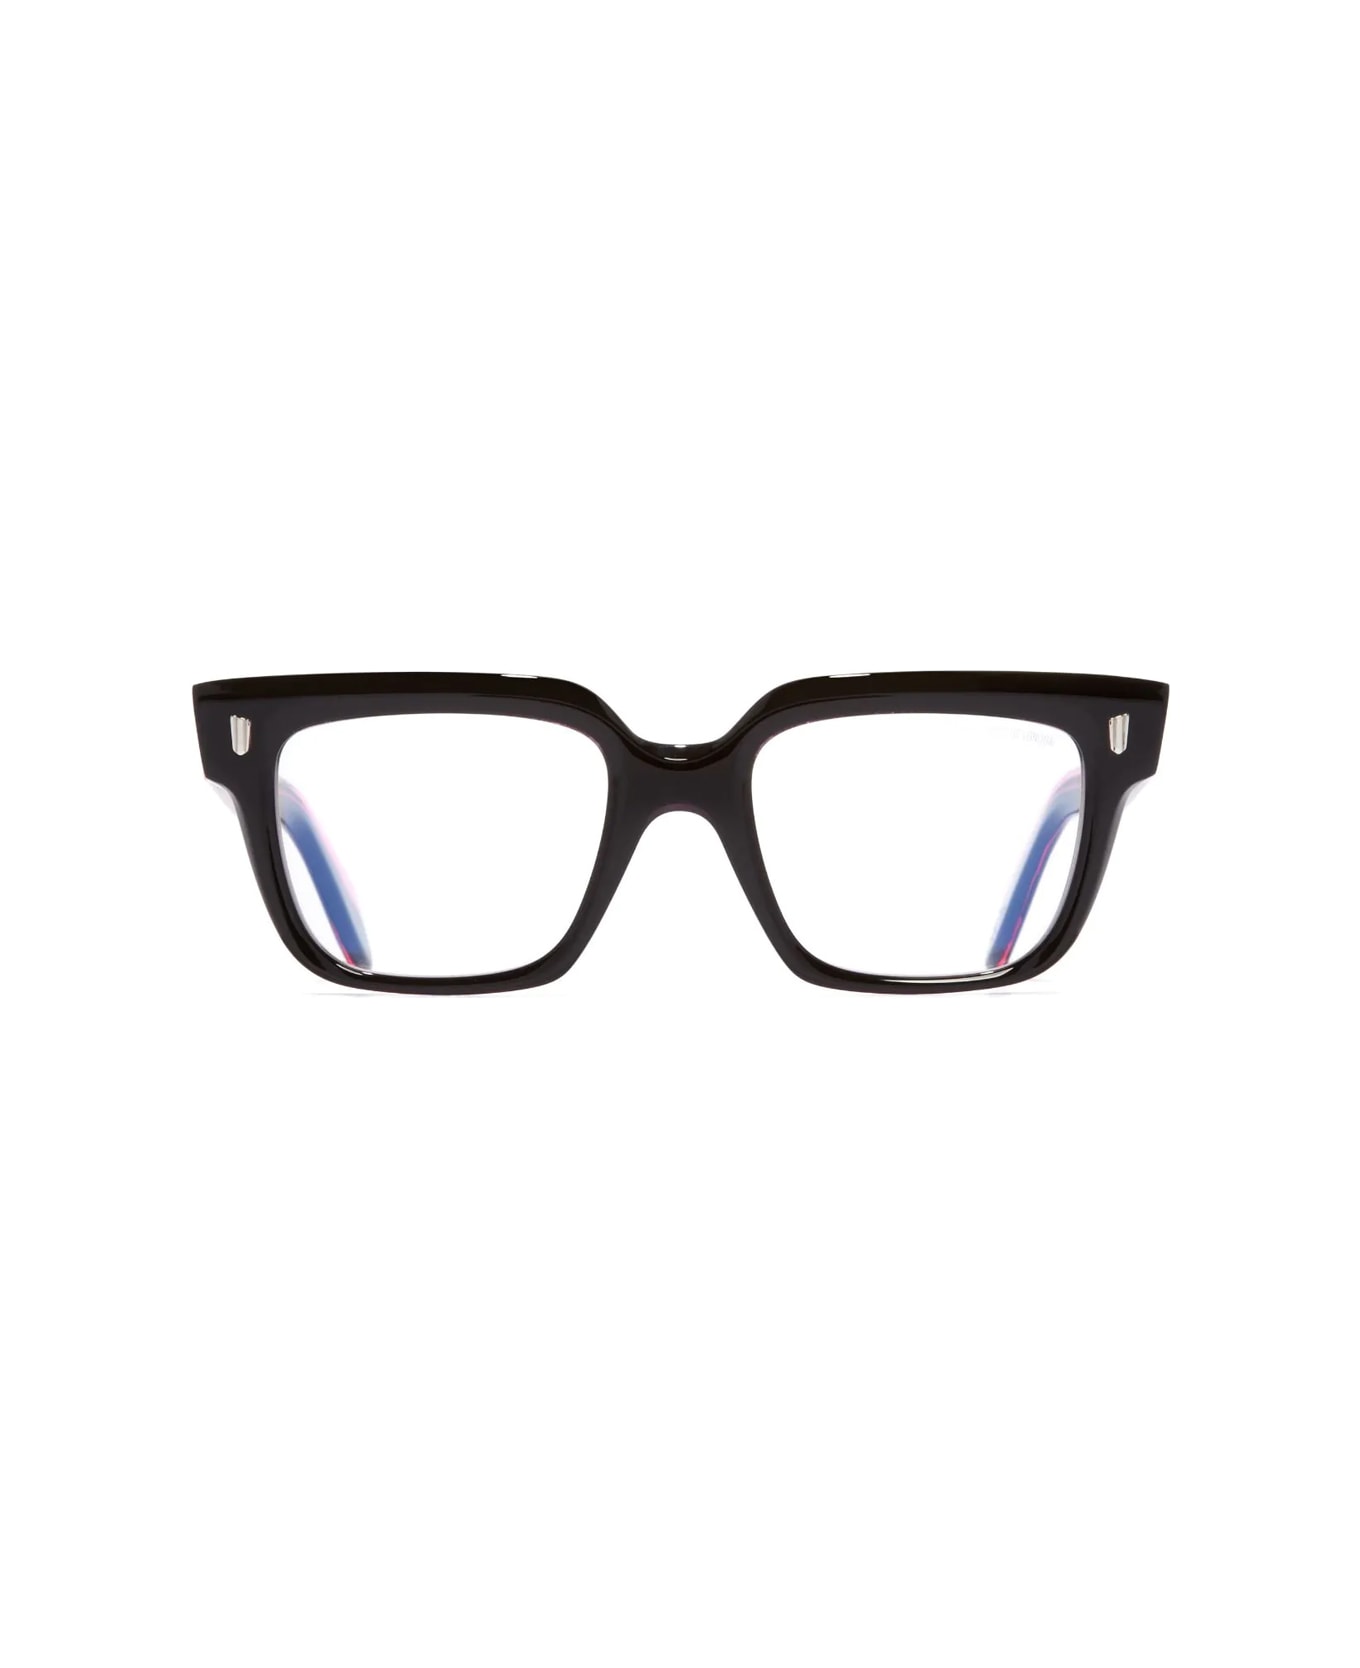 Cutler and Gross 9347 01 Glasses - Nero アイウェア